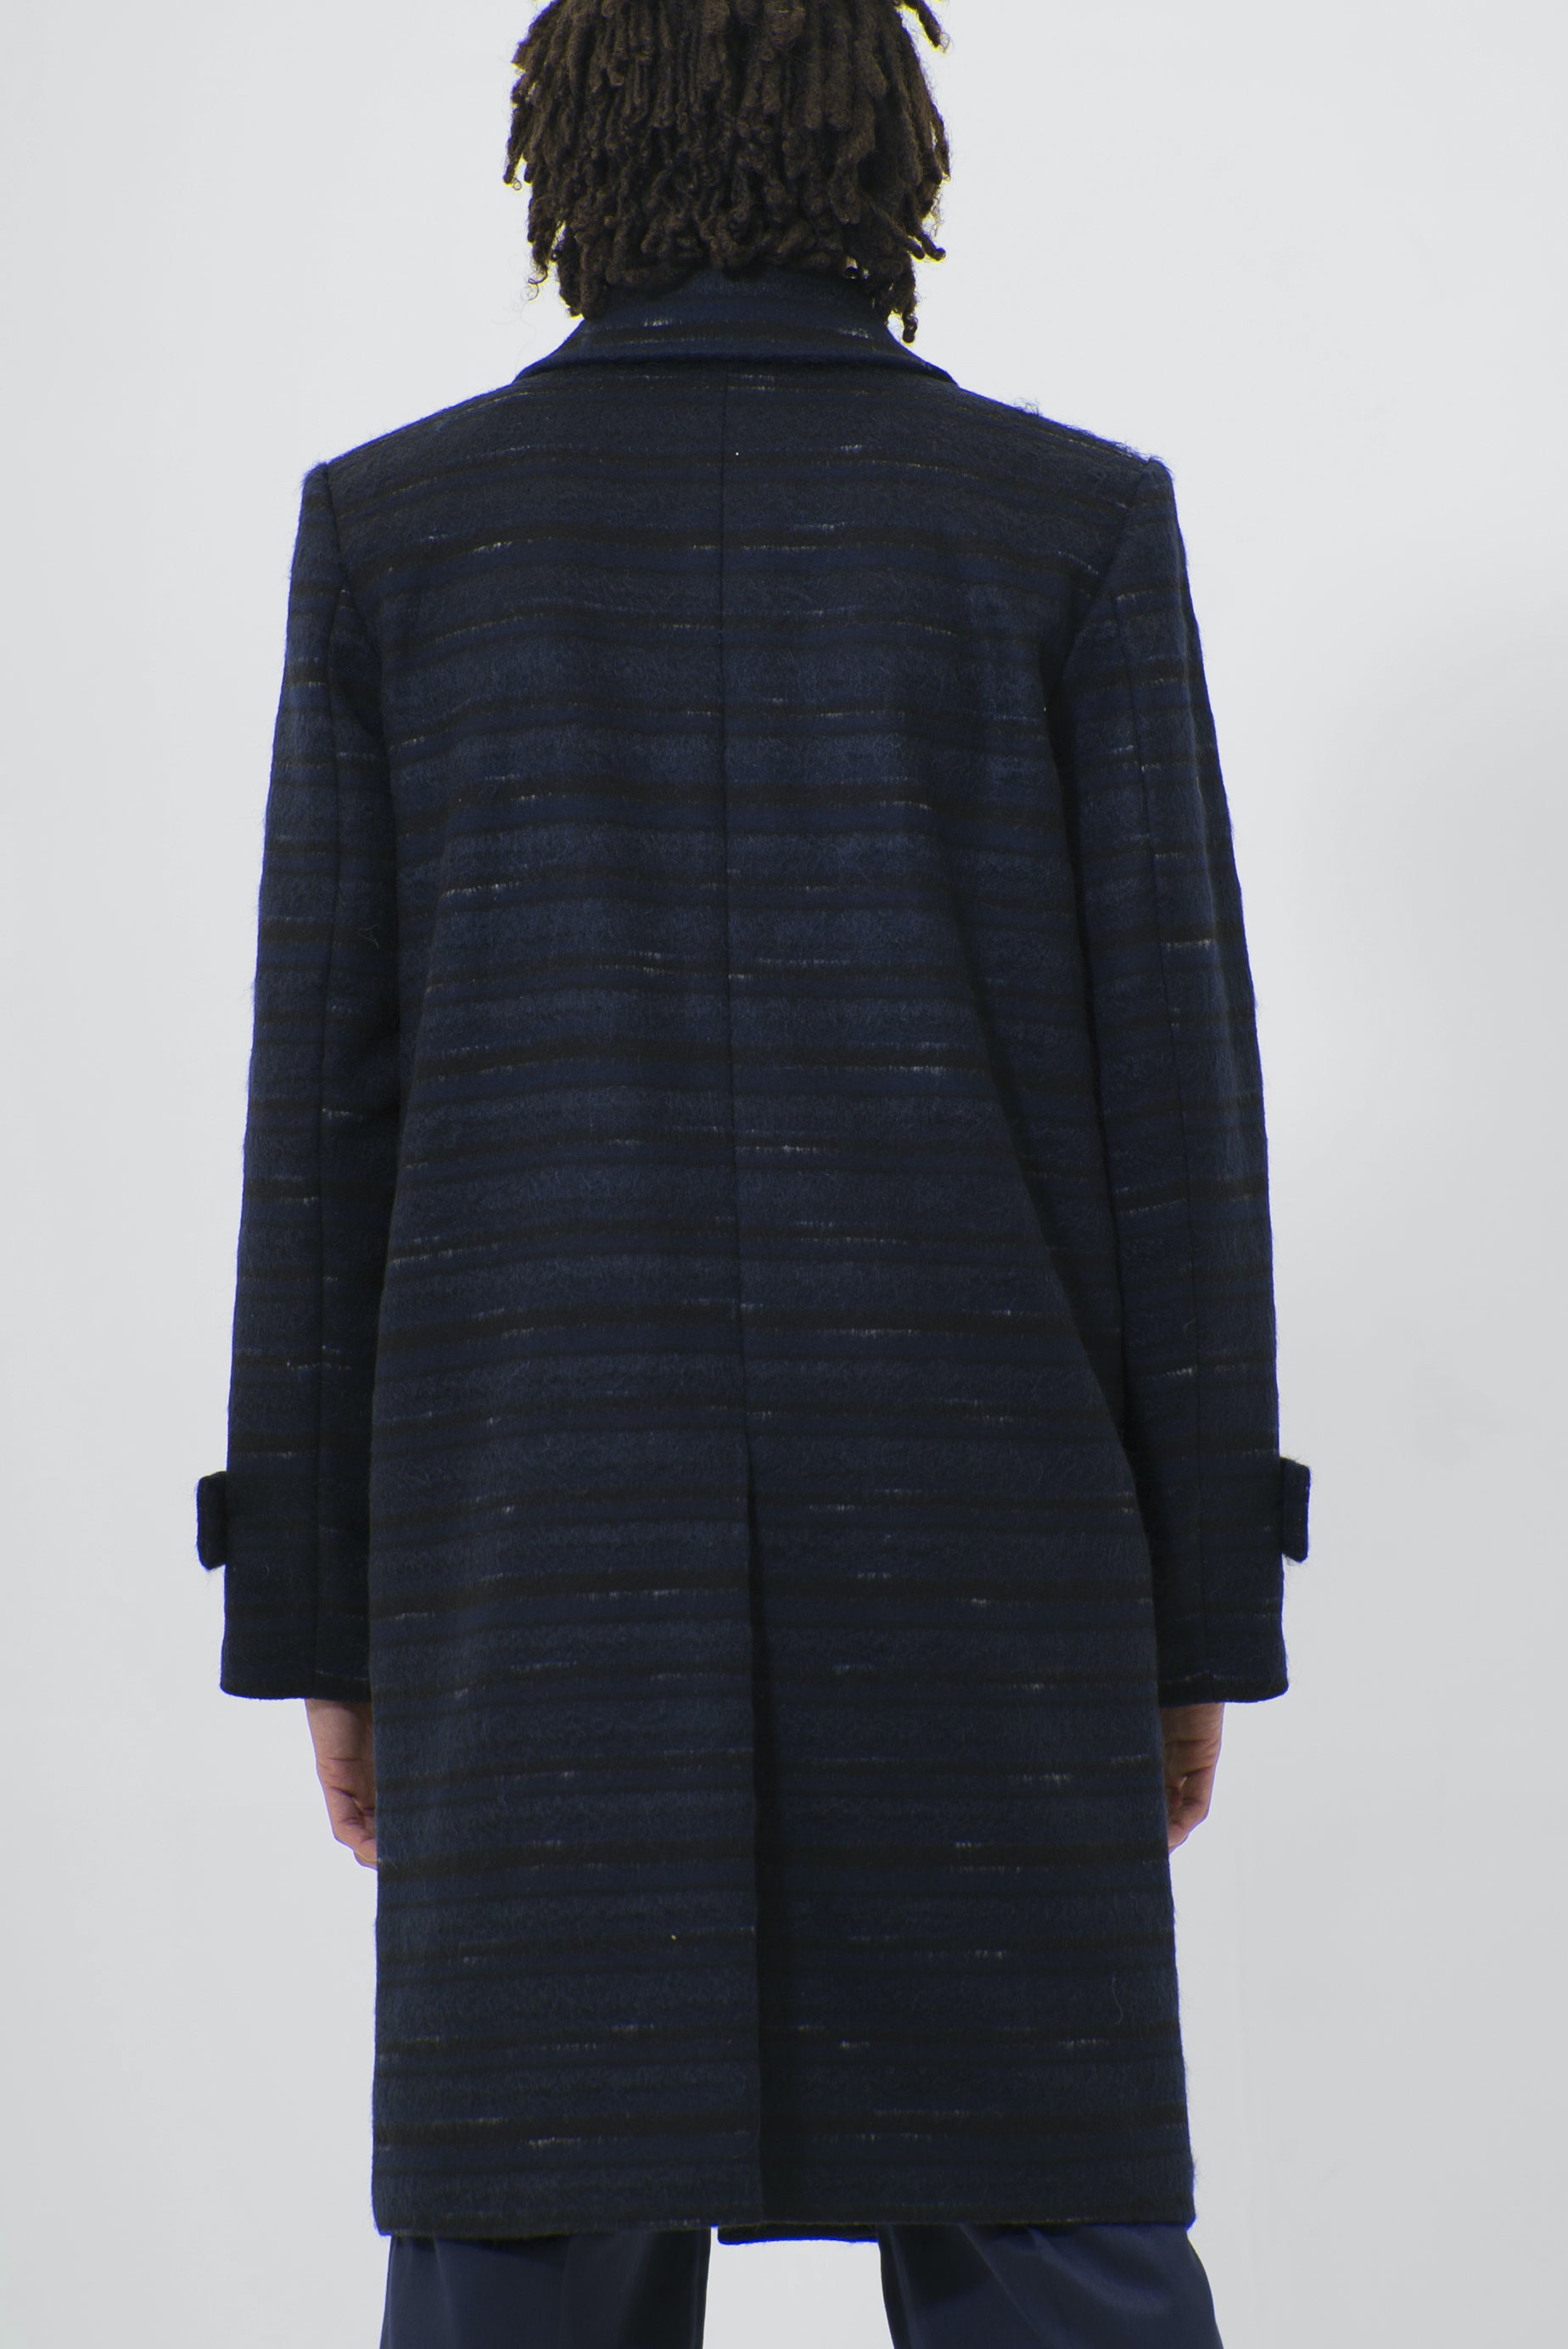 Vulturine Blue Wool Blend Coat (Exclusive to Website)